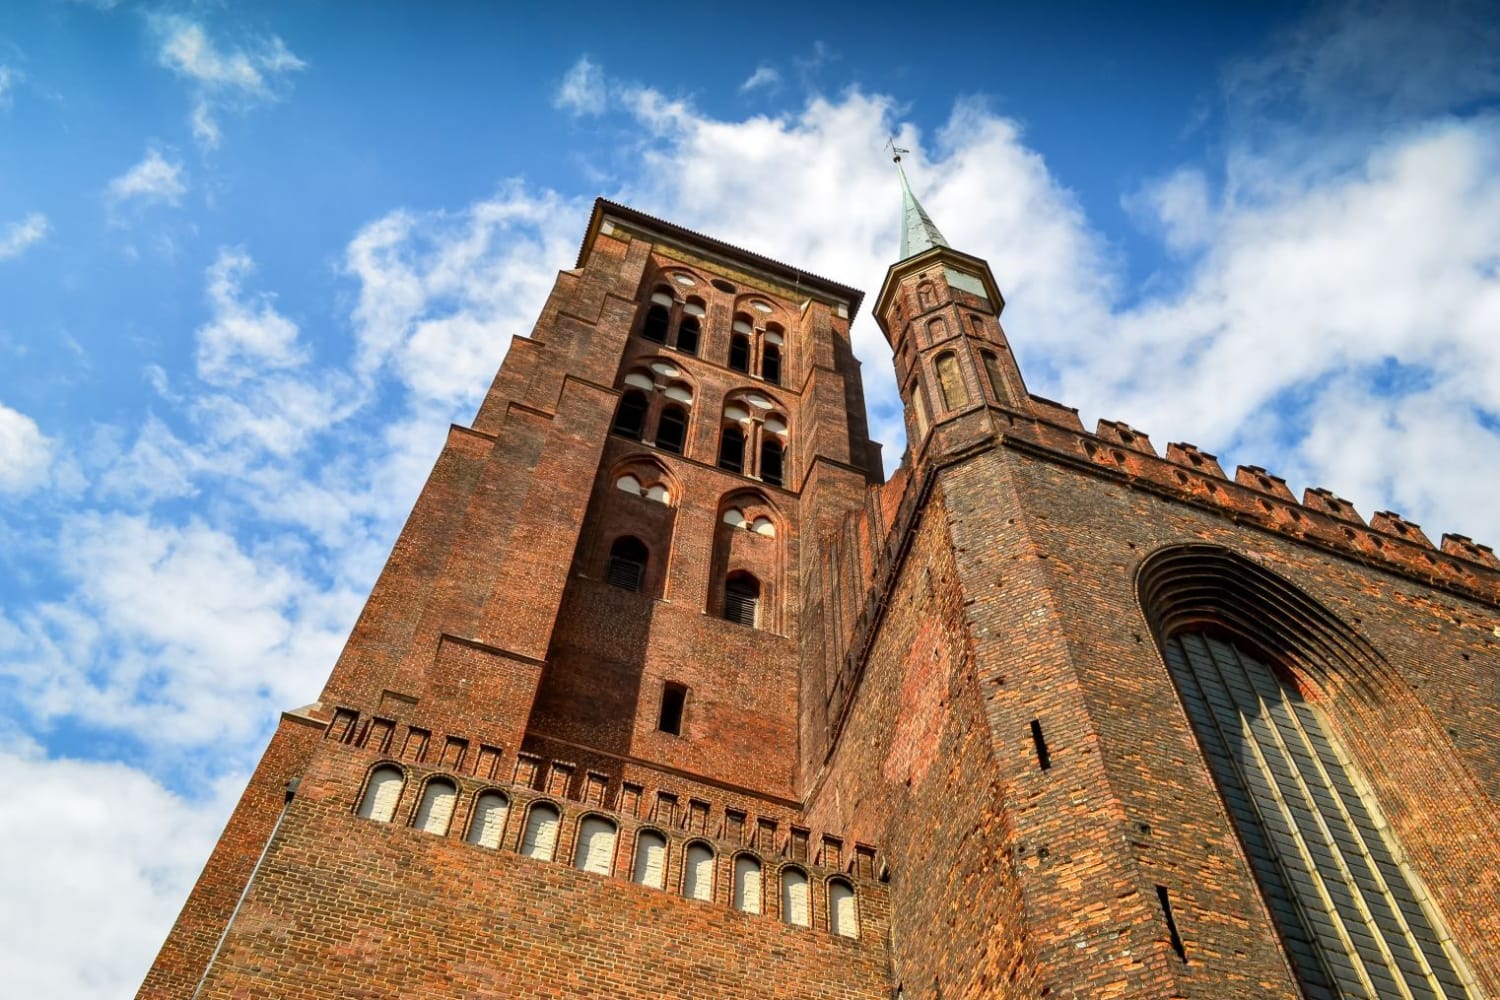 Saint Mary's Basilica: The largest Brick Gothic church in Poland